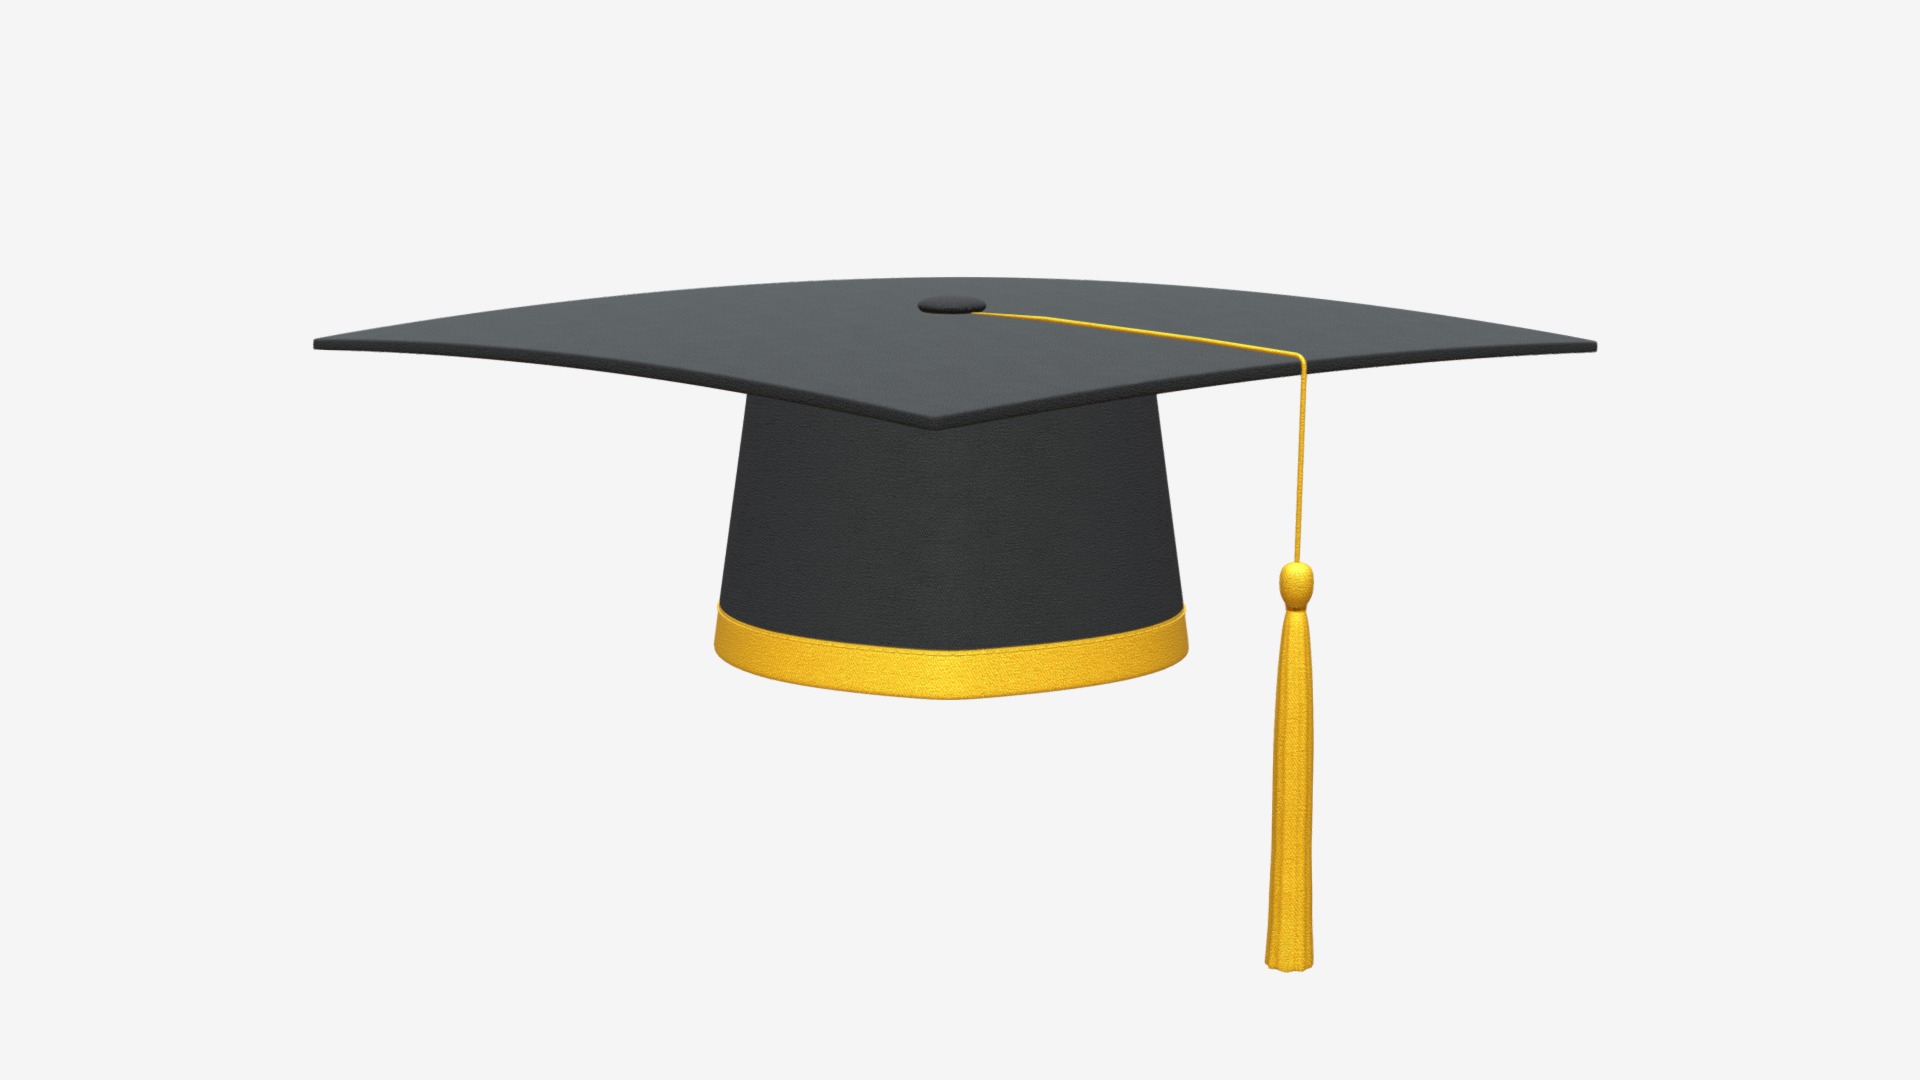 3D model Graduation cap with gold tassel - This is a 3D model of the Graduation cap with gold tassel. The 3D model is about a graduation cap with a yellow tassel.